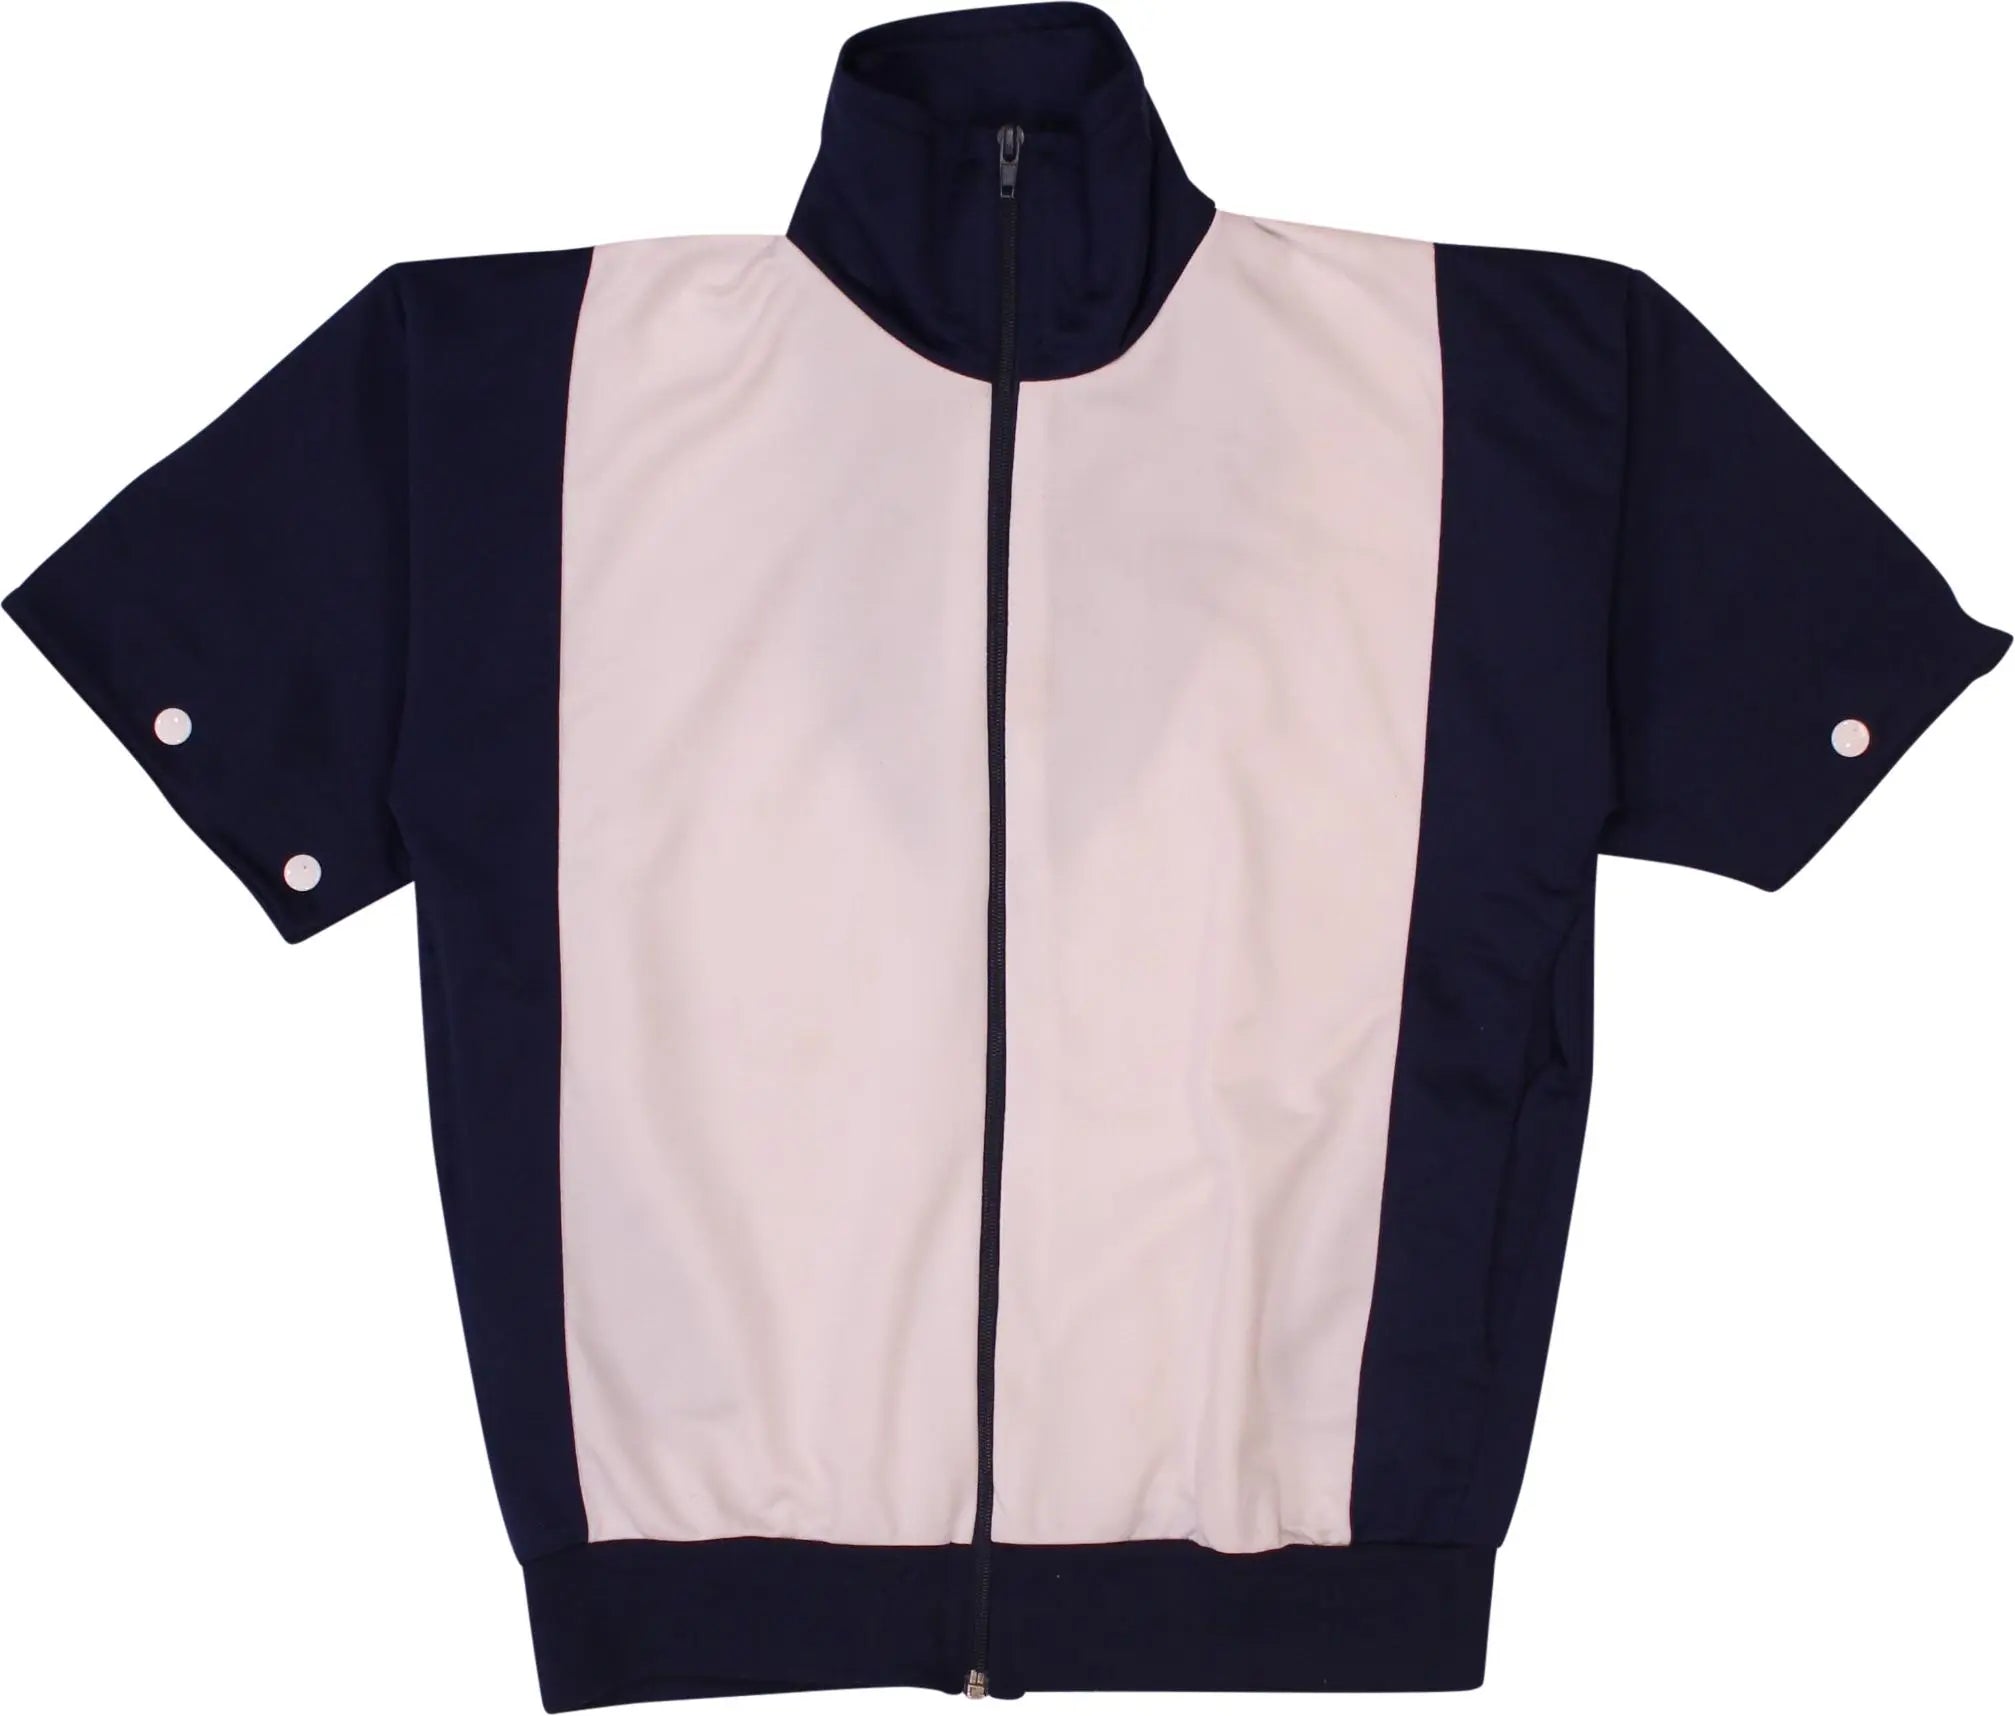 Mili Sport - Sport Jacket- ThriftTale.com - Vintage and second handclothing